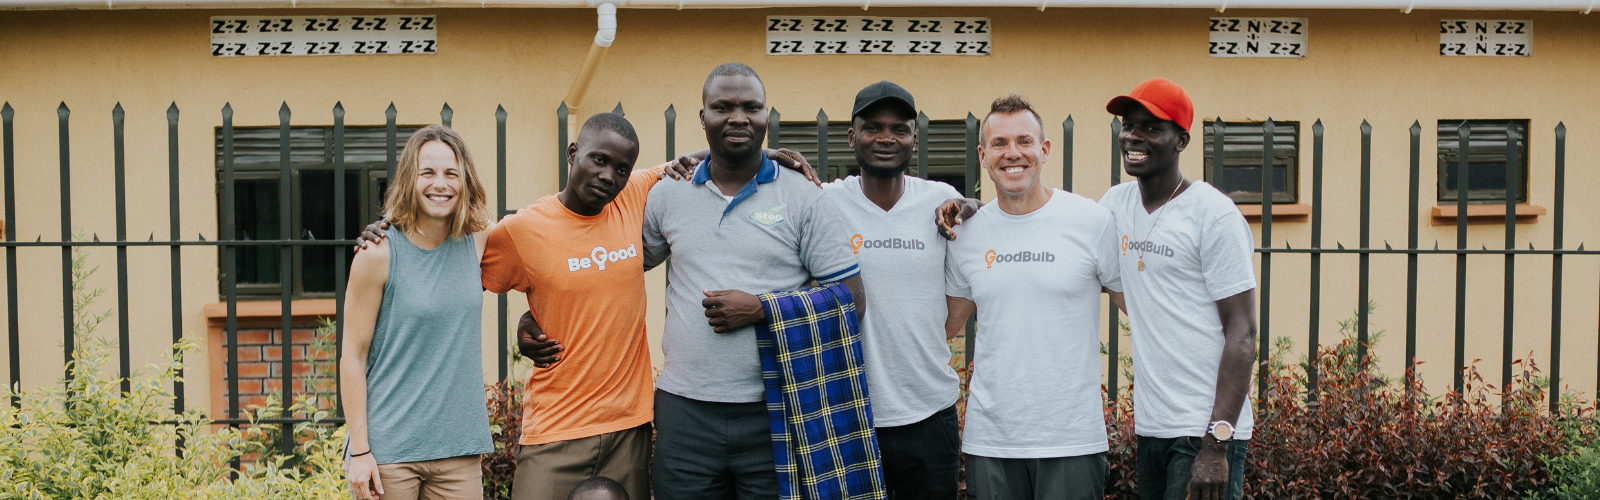 team GoodBulb in Uganda